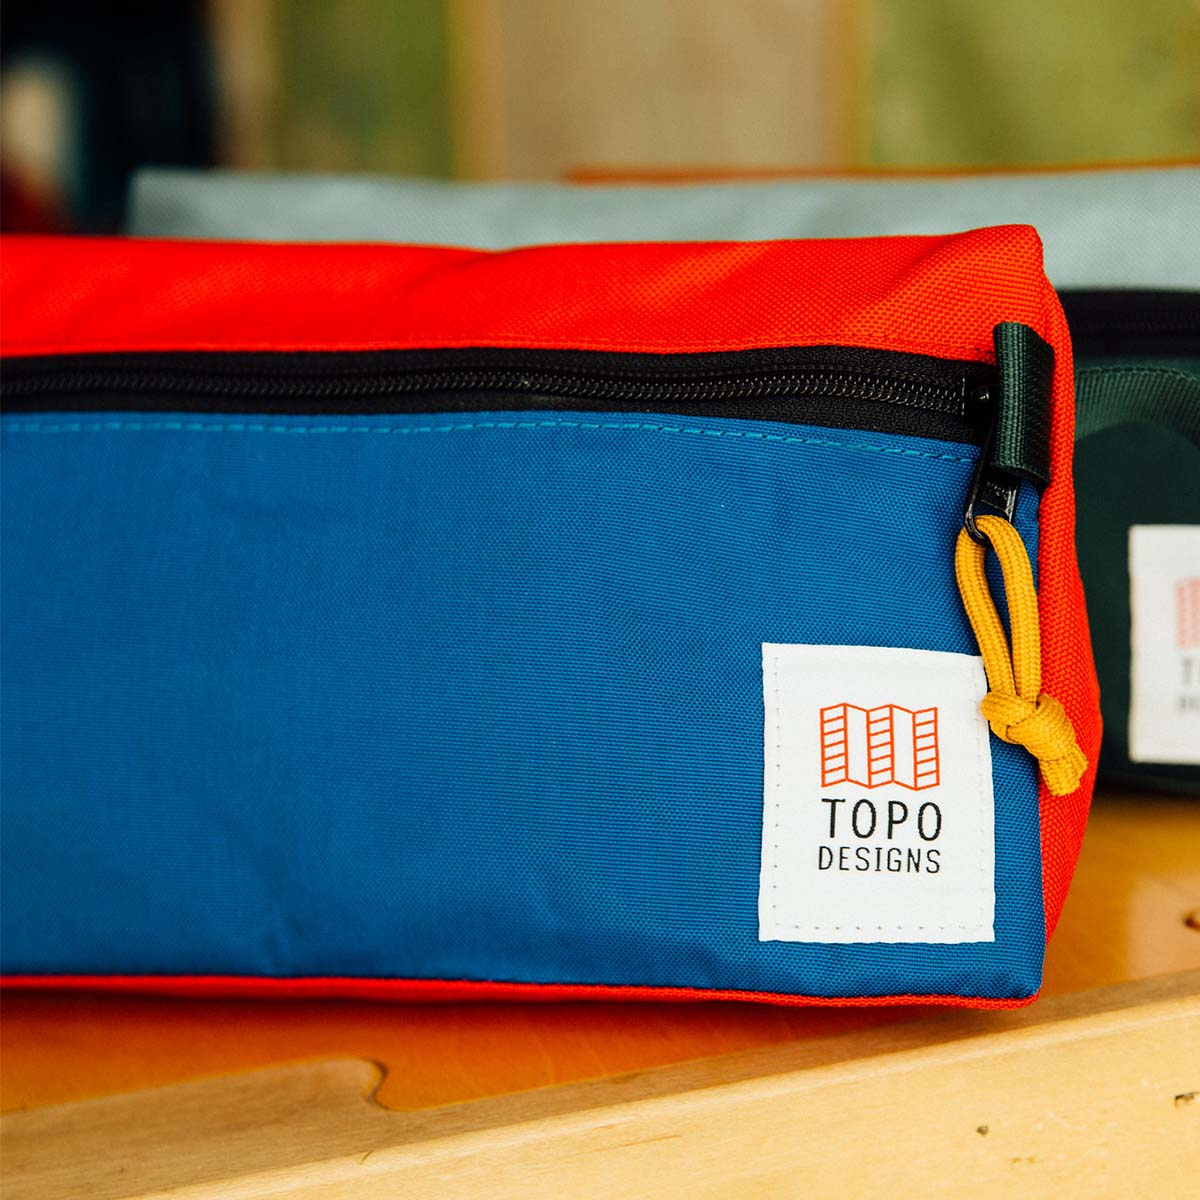 Topo Designs Dopp Kit Blue/Red, water-resistant, travel light, accessory bag